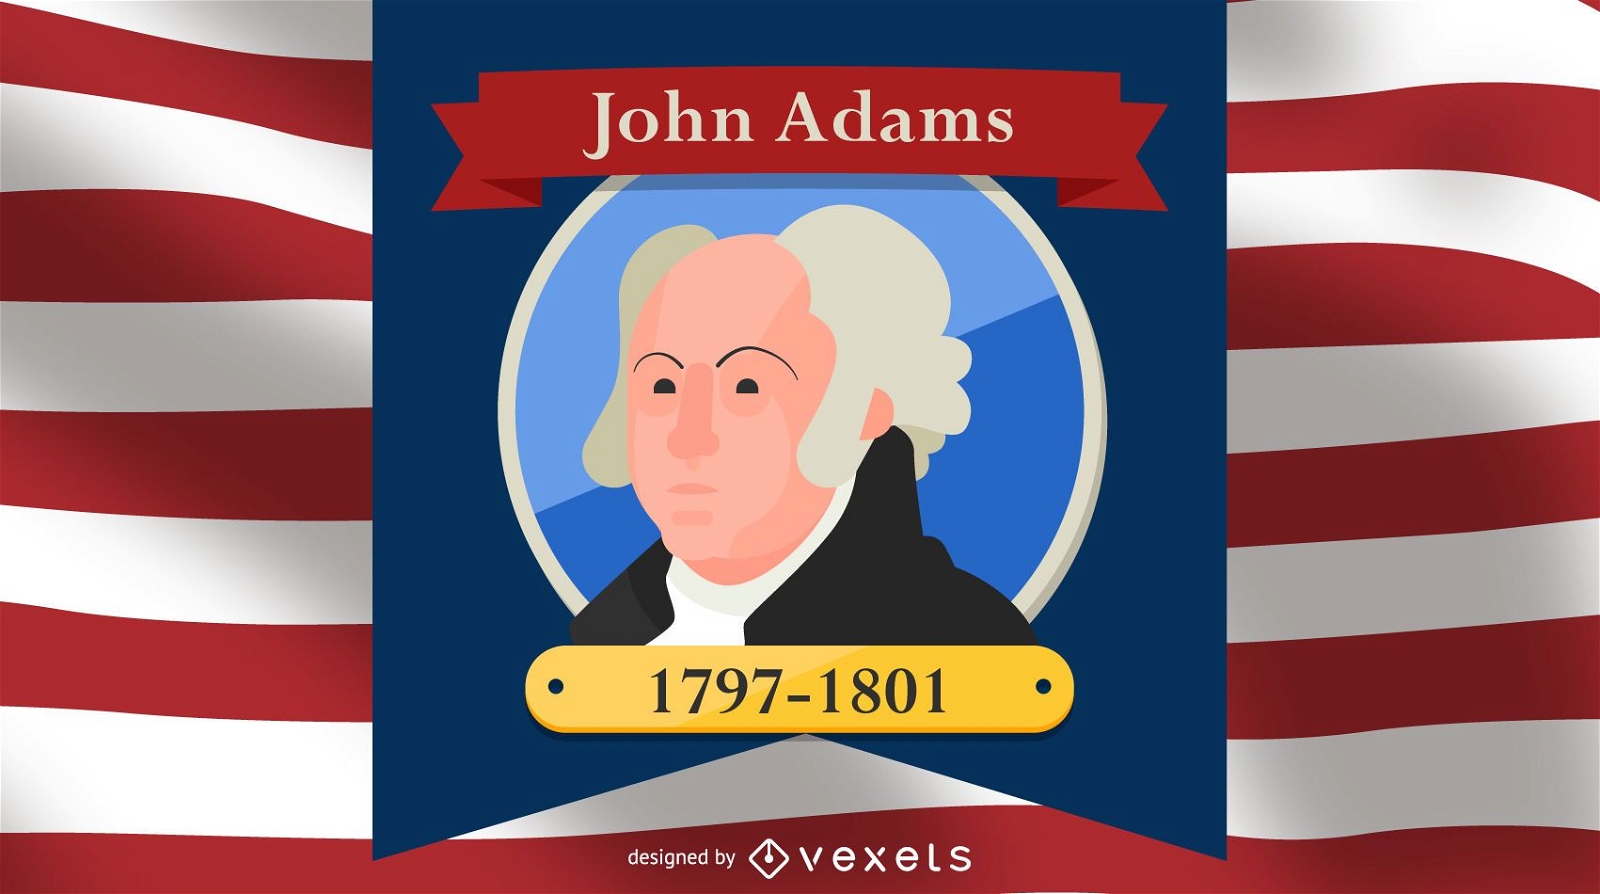 Ilustraci?n de dibujos animados del presidente John Adams